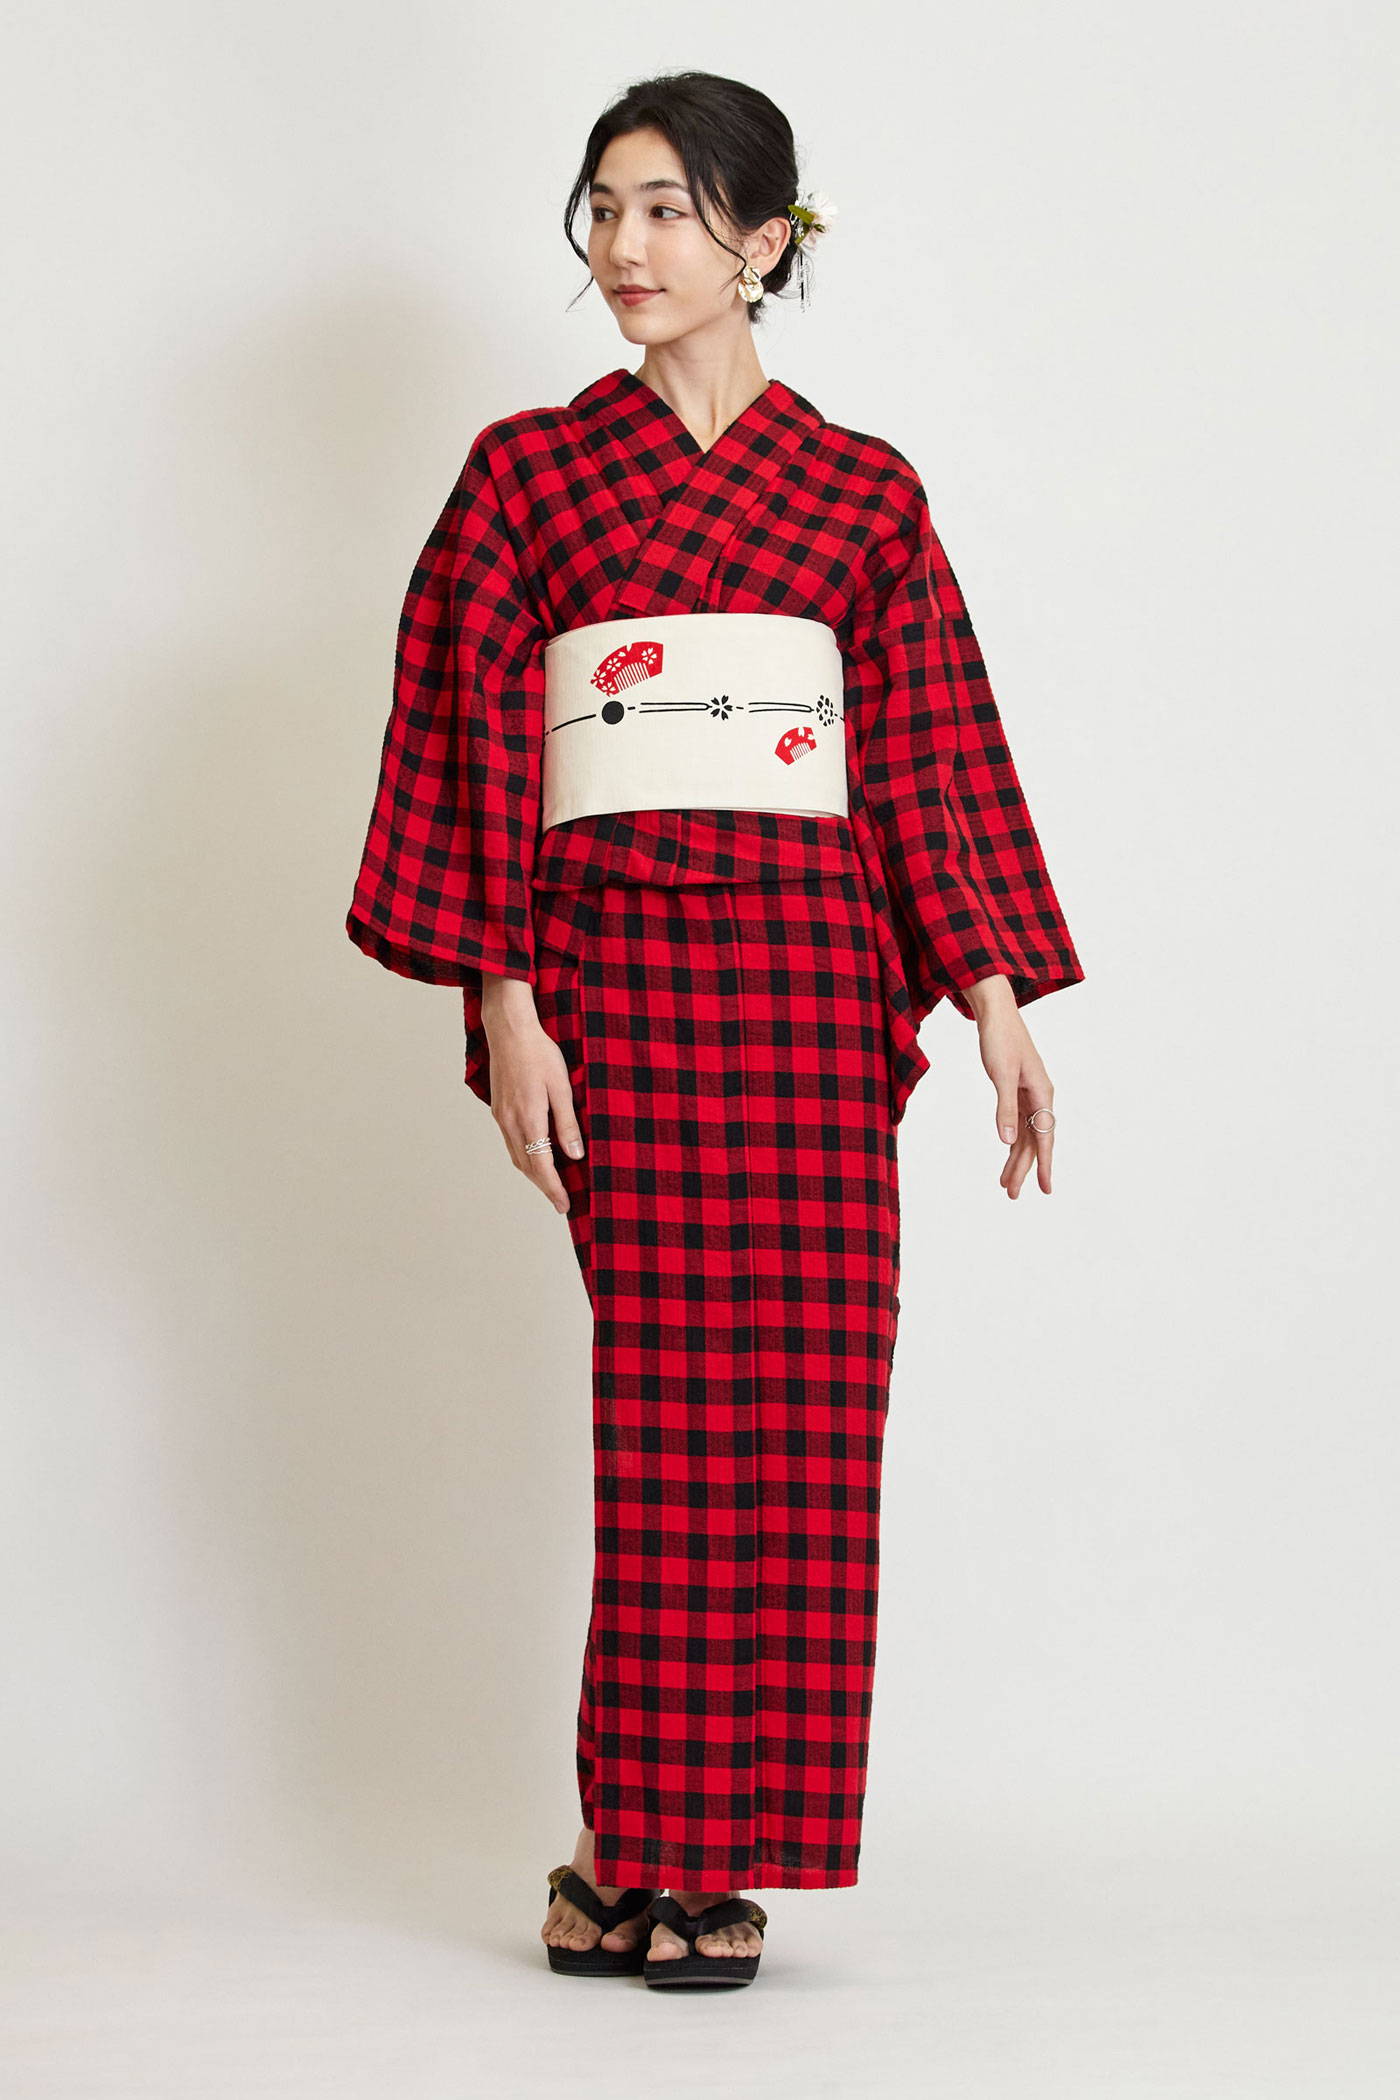 Geneigd zijn Stiptheid Vakantie Yukata vs Kimono: What's the Difference? – Japan Objects Store